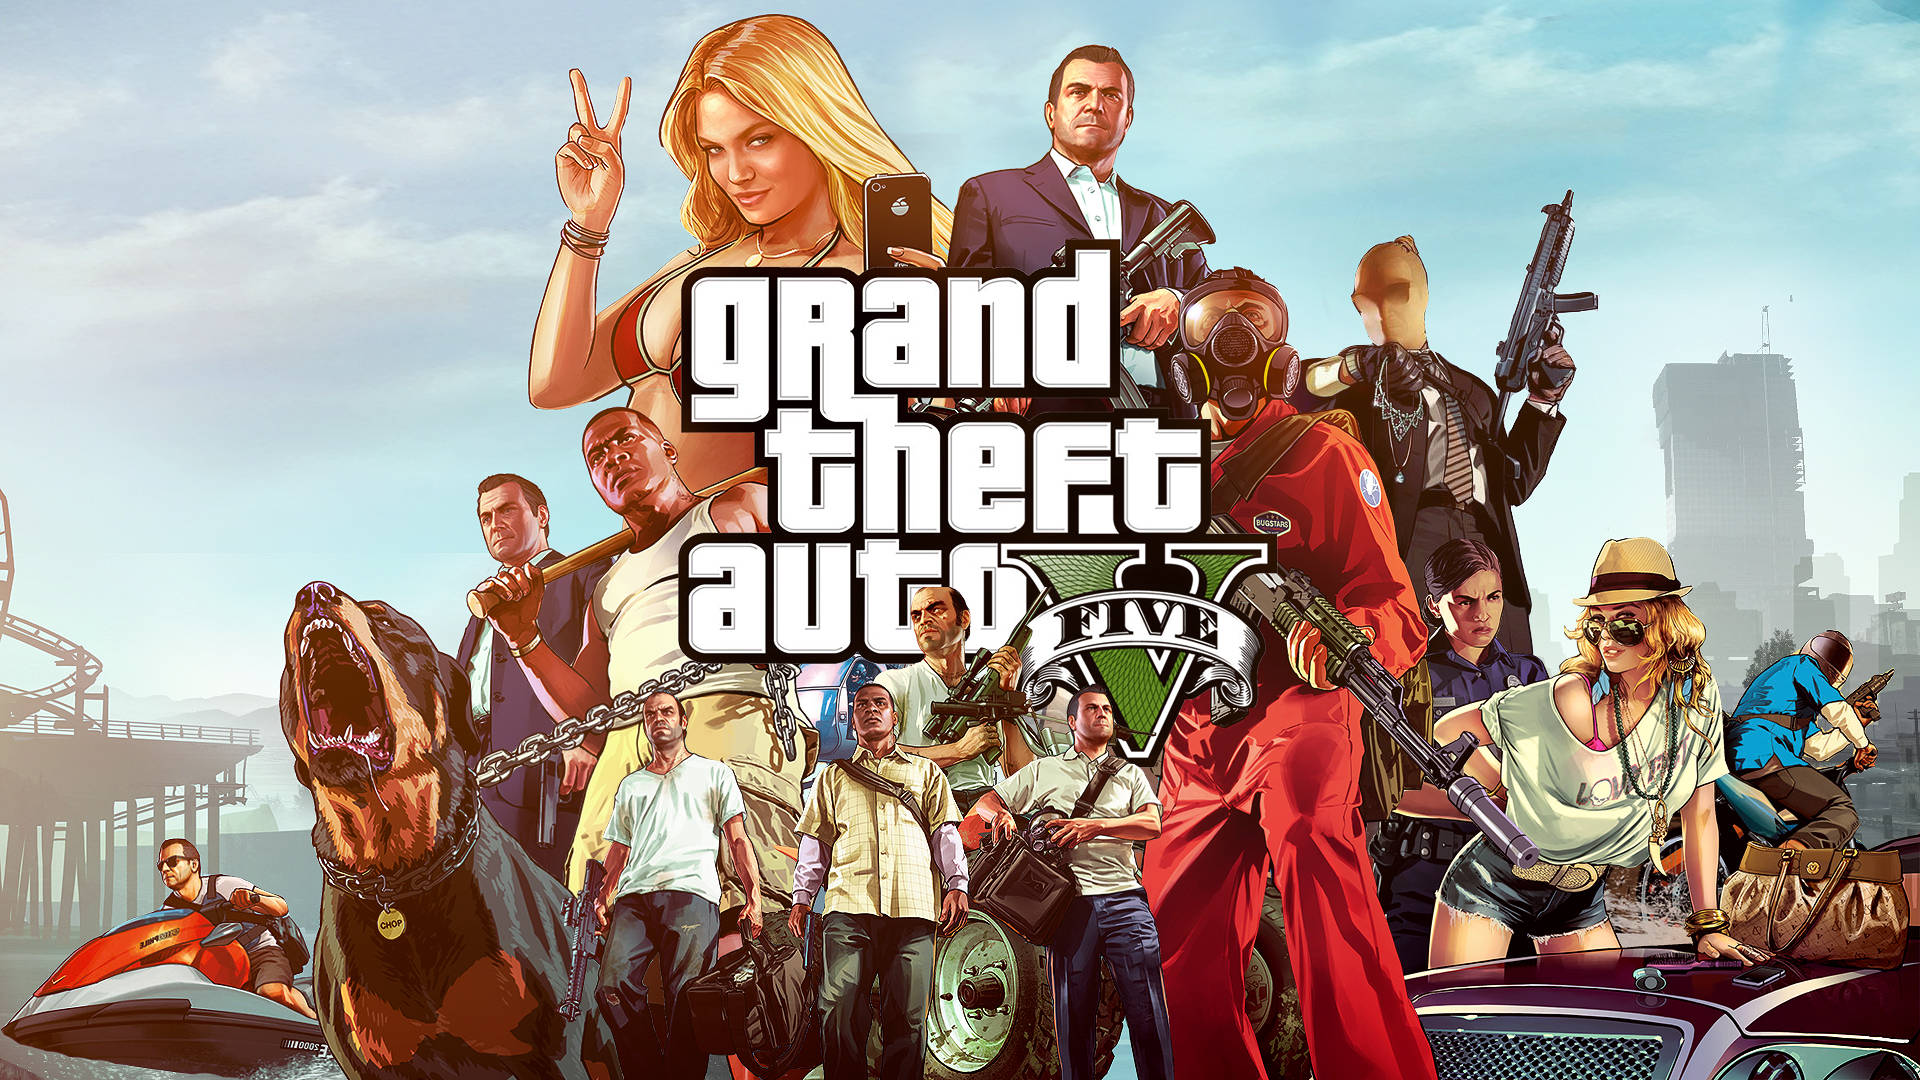 Free Grand Theft Auto V Wallpaper Downloads, [200+] Grand Theft Auto V  Wallpapers for FREE 